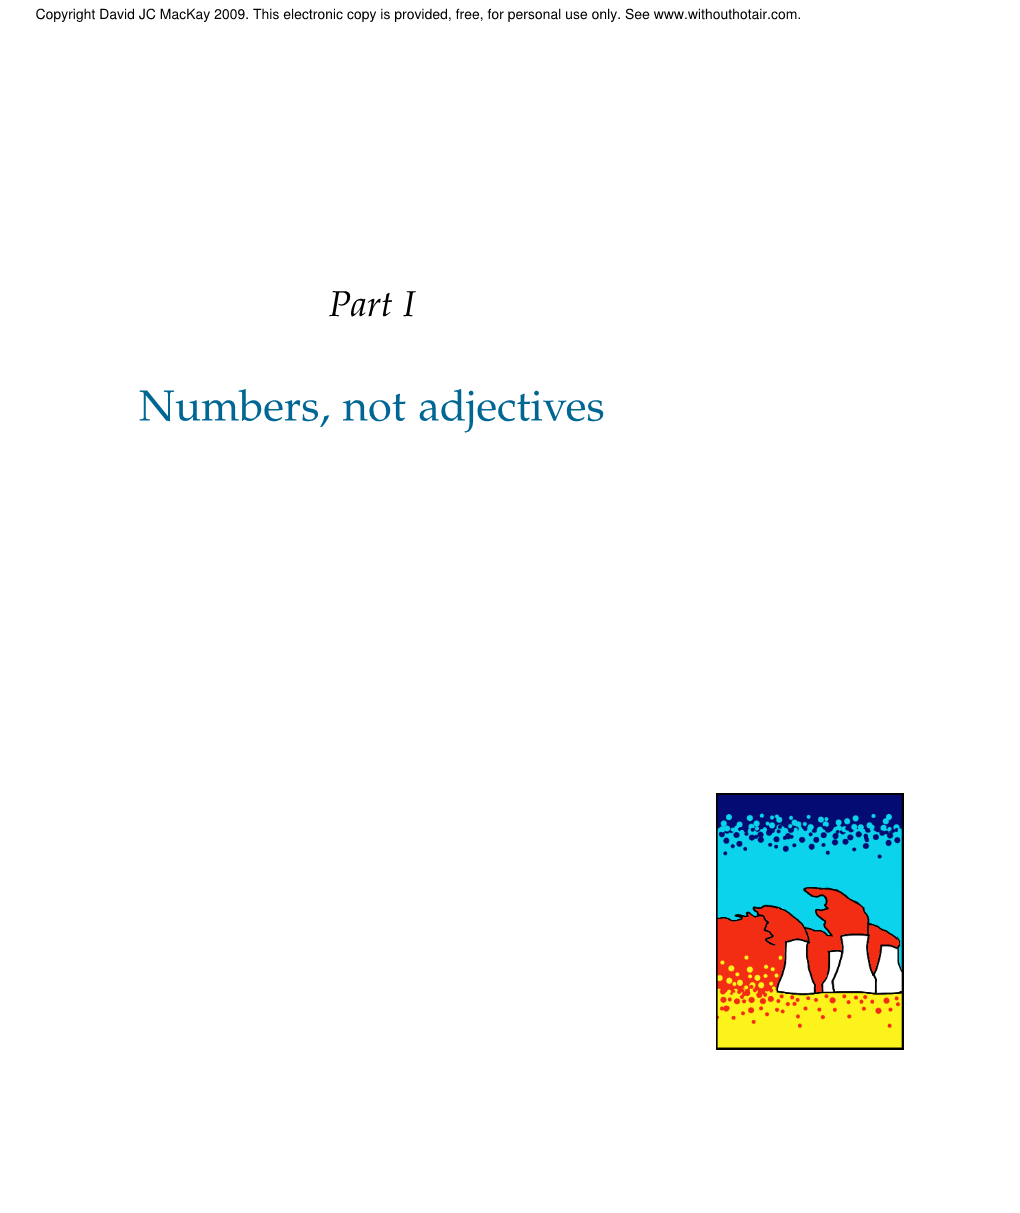 Numbers, Not Adjectives Copyright David JC Mackay 2009